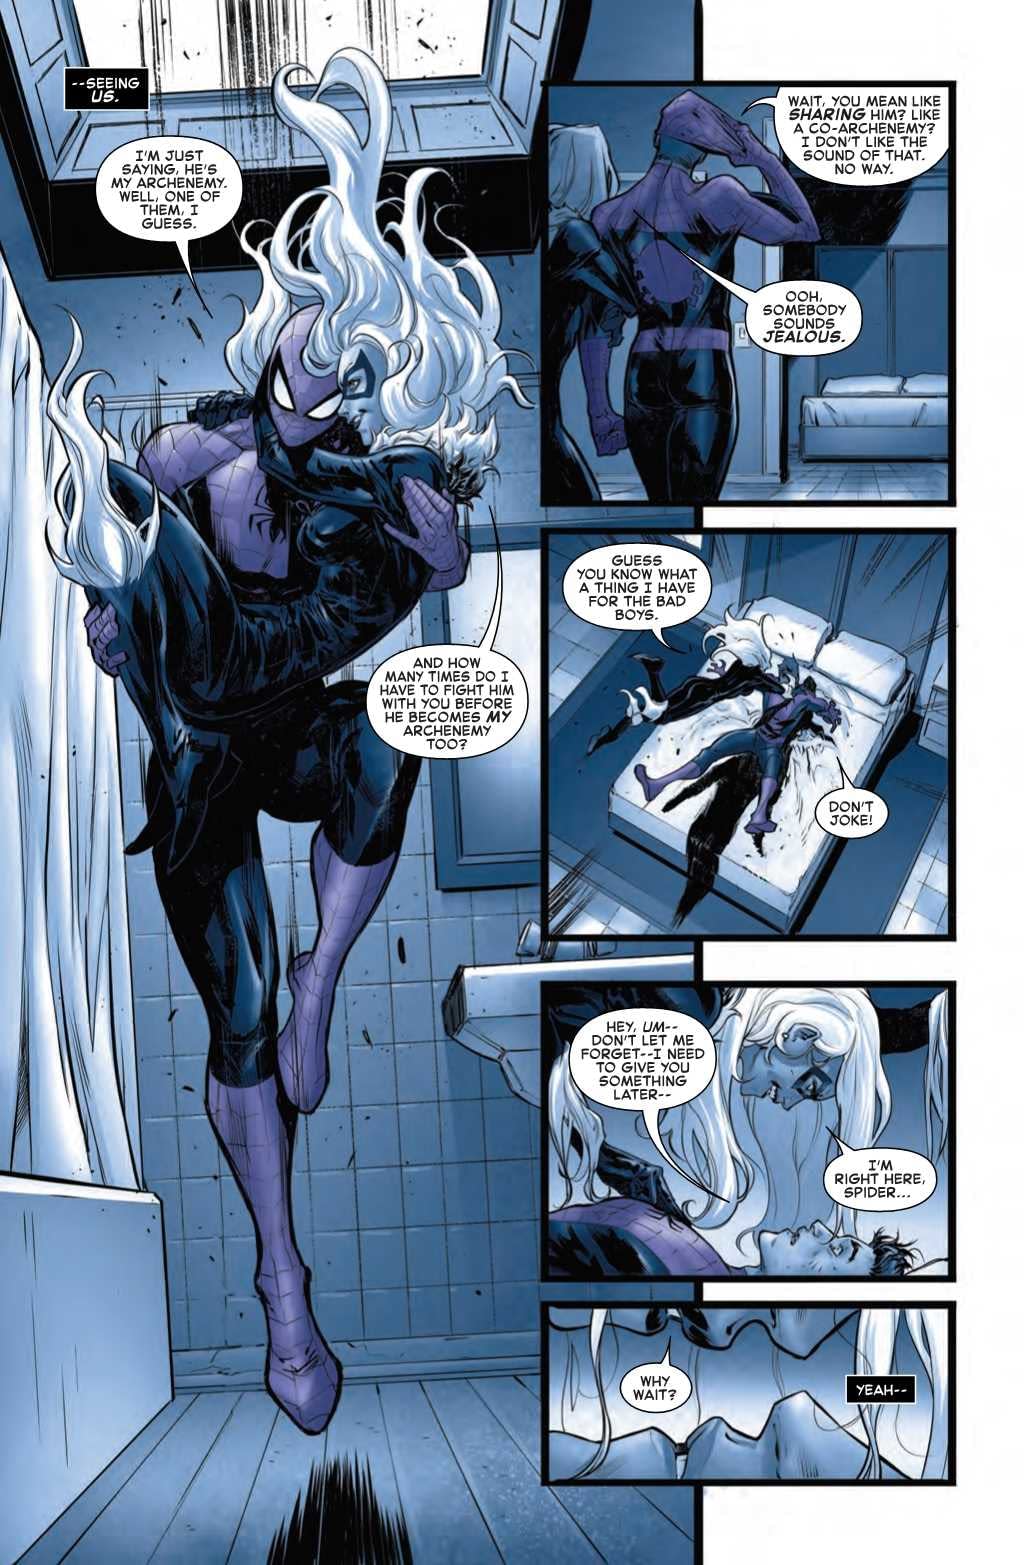 Black Cat Having Sex Dreams About Spider-Man in Next Week's Amazing Spider-Man #16.HU